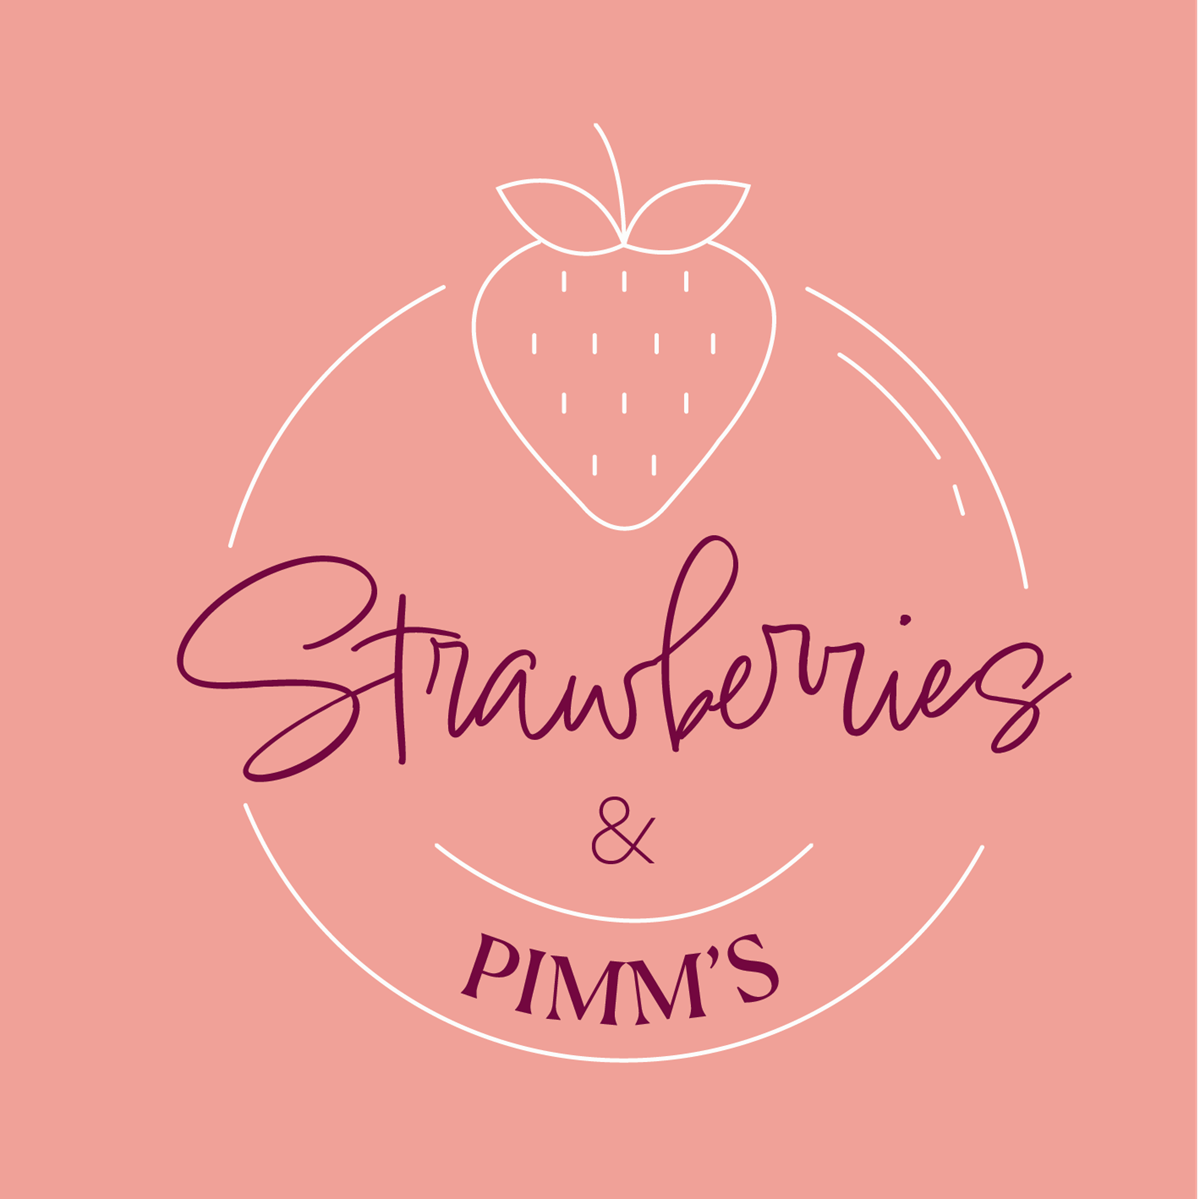 Strawberries & Pimm's logo